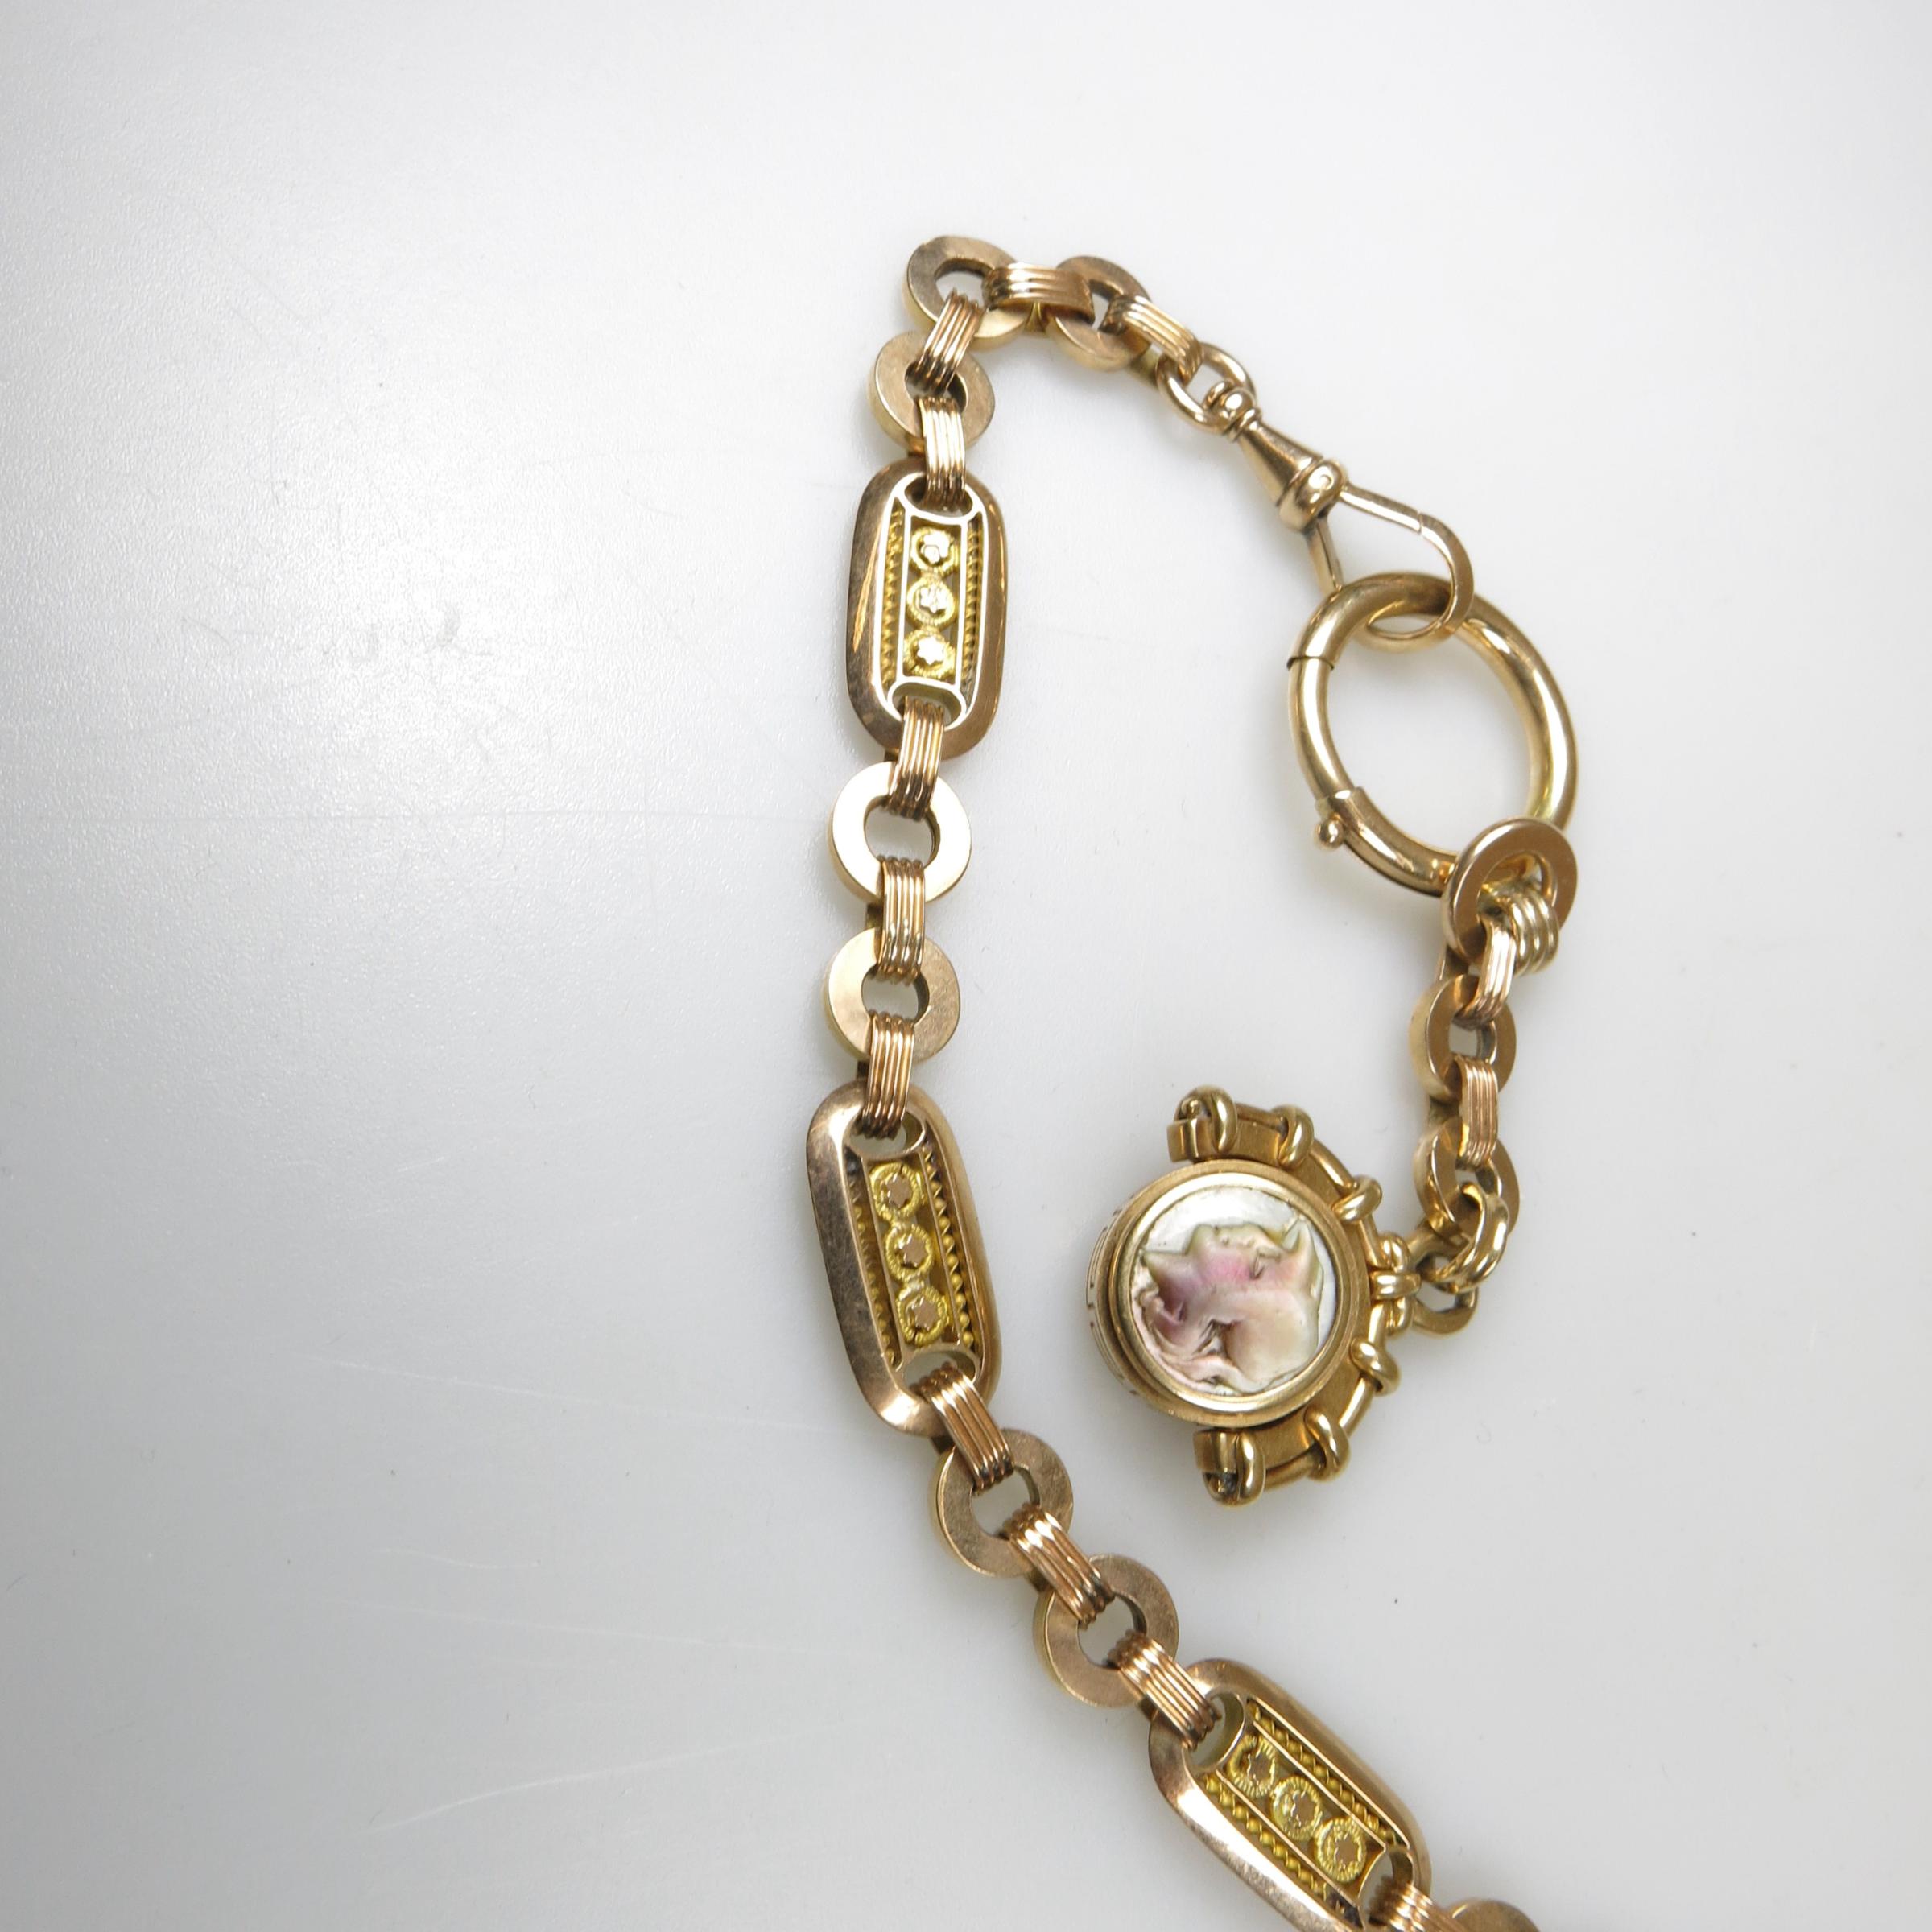 Austrian 14k Yellow Gold Watch Chain